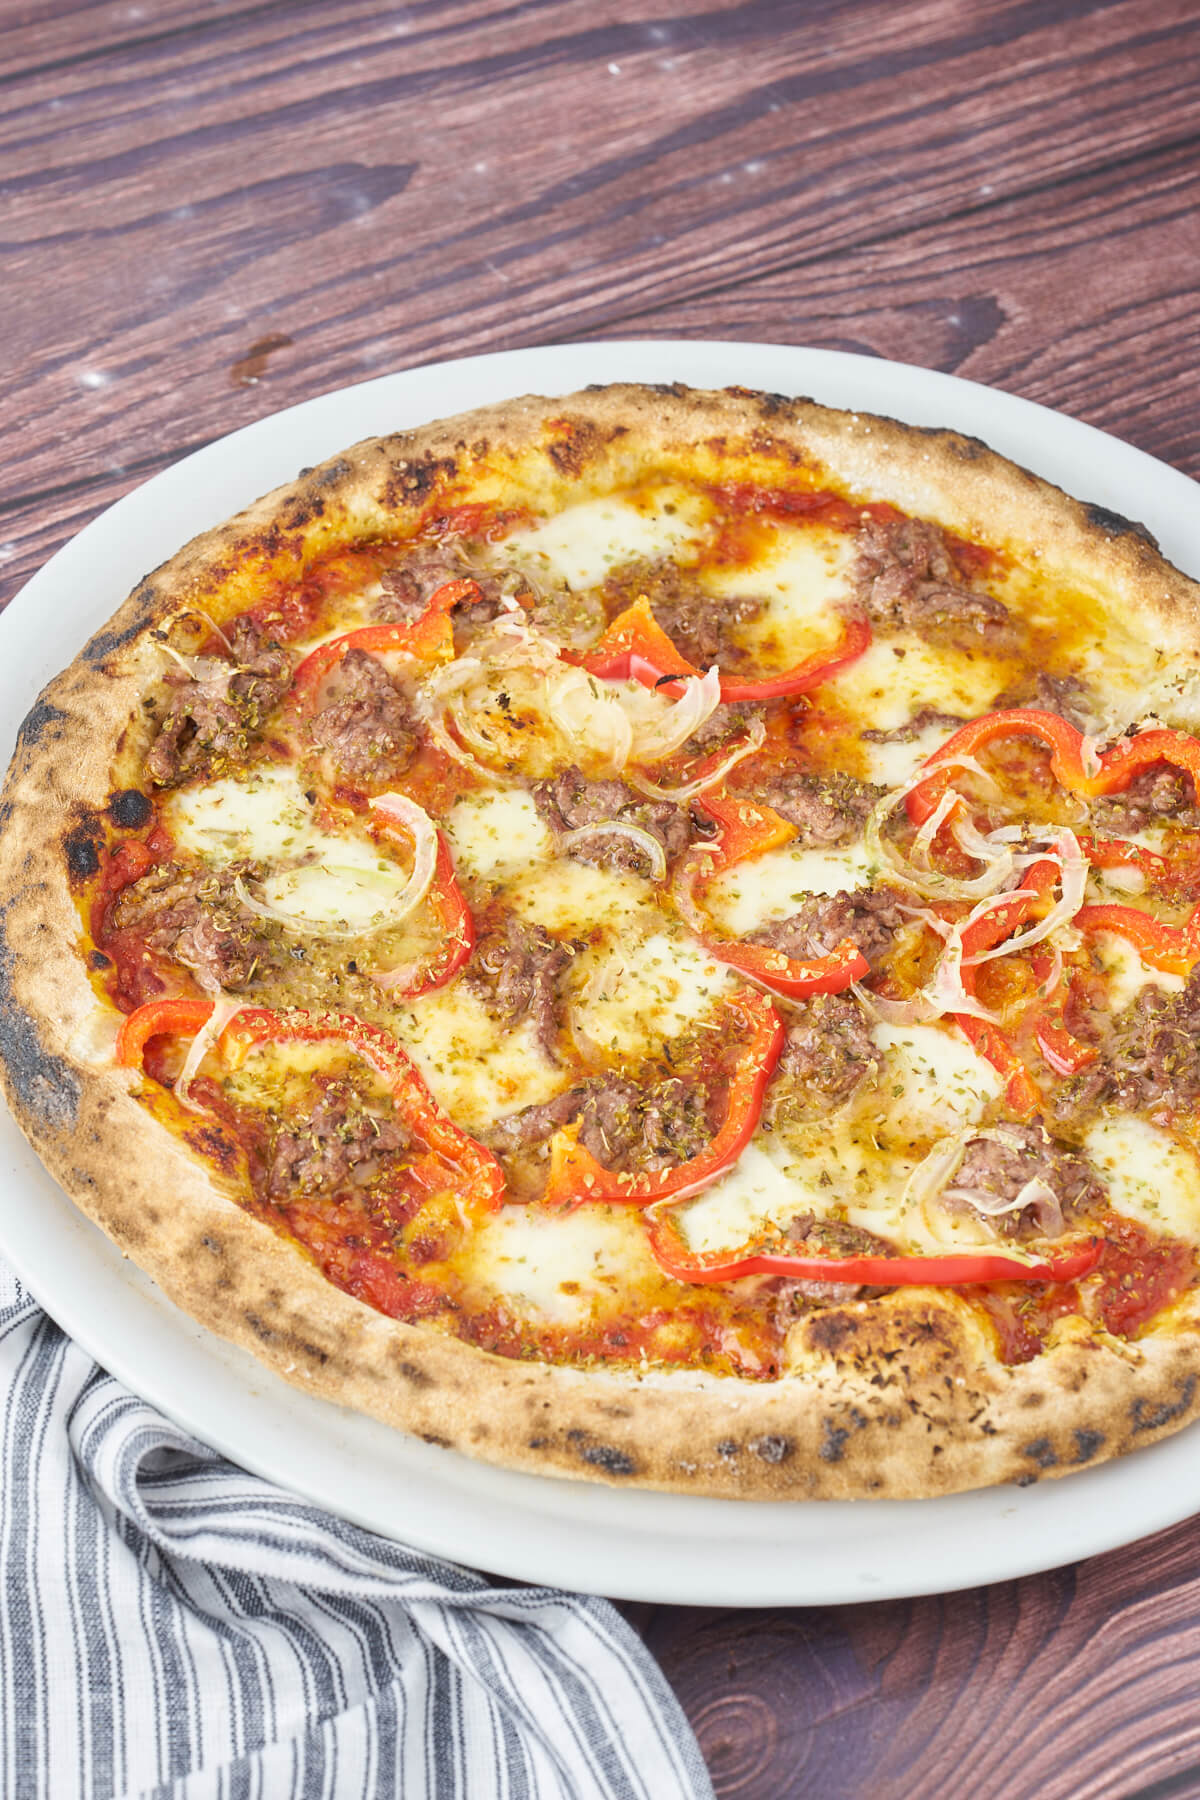 tallerken med oksekødspizza med peberfrugt